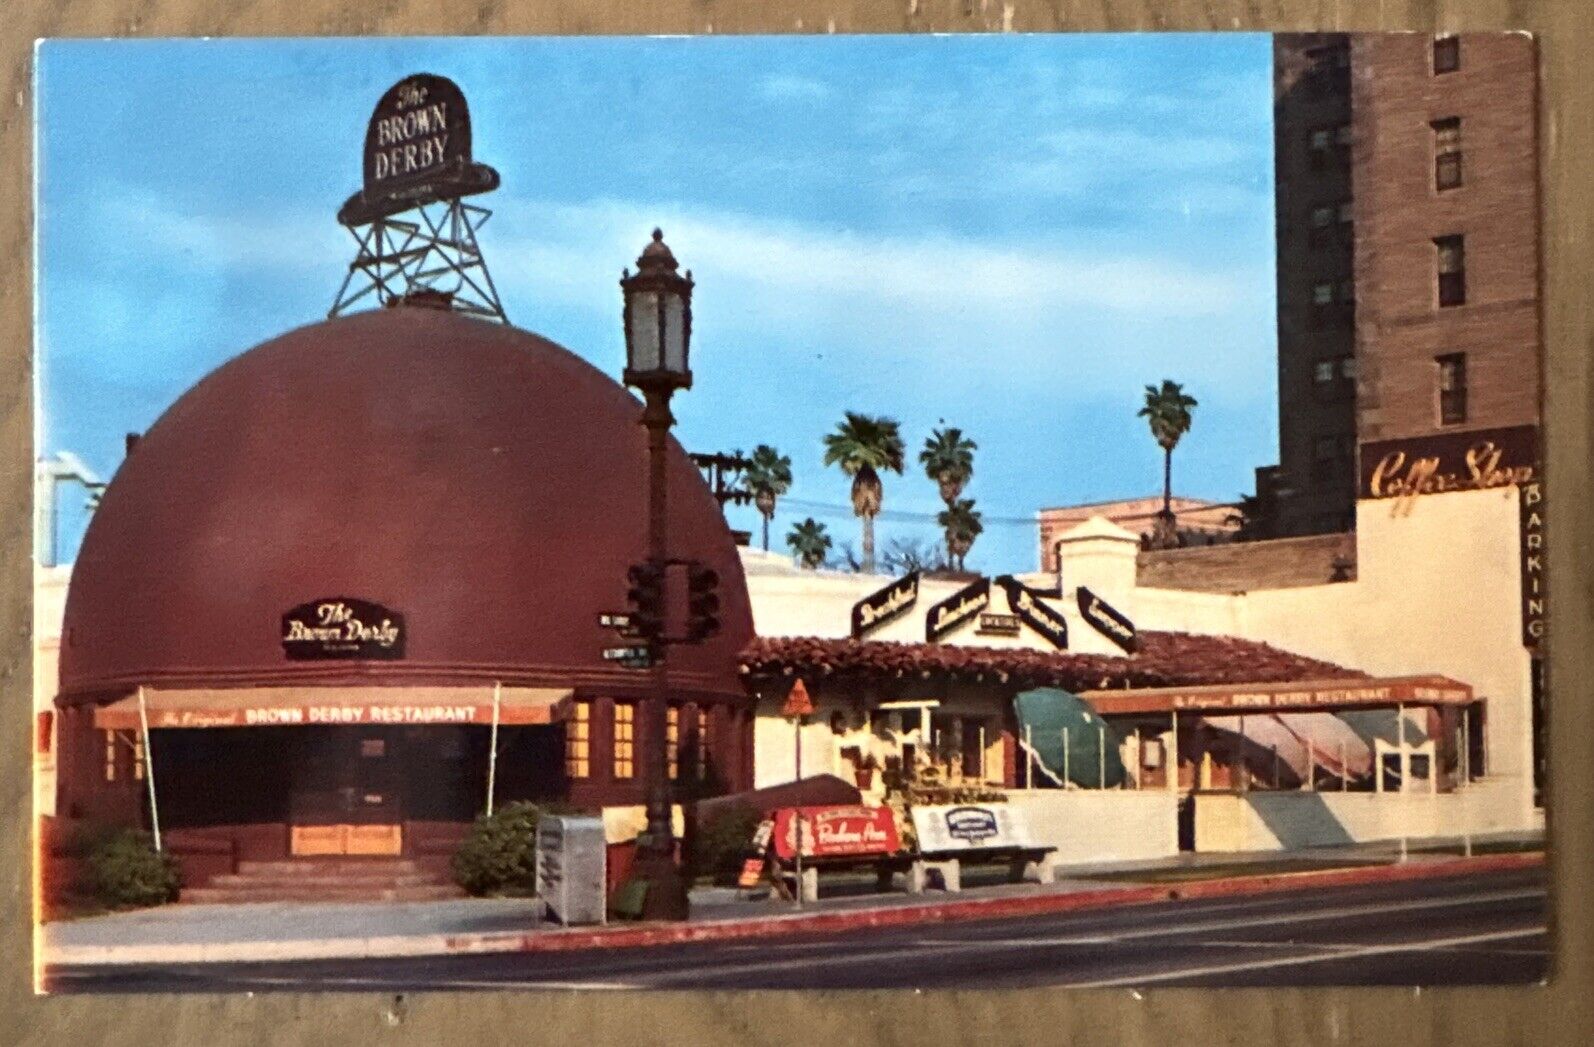 Los Angeles California CA Brown Derby Restaurant Vintage Postcard